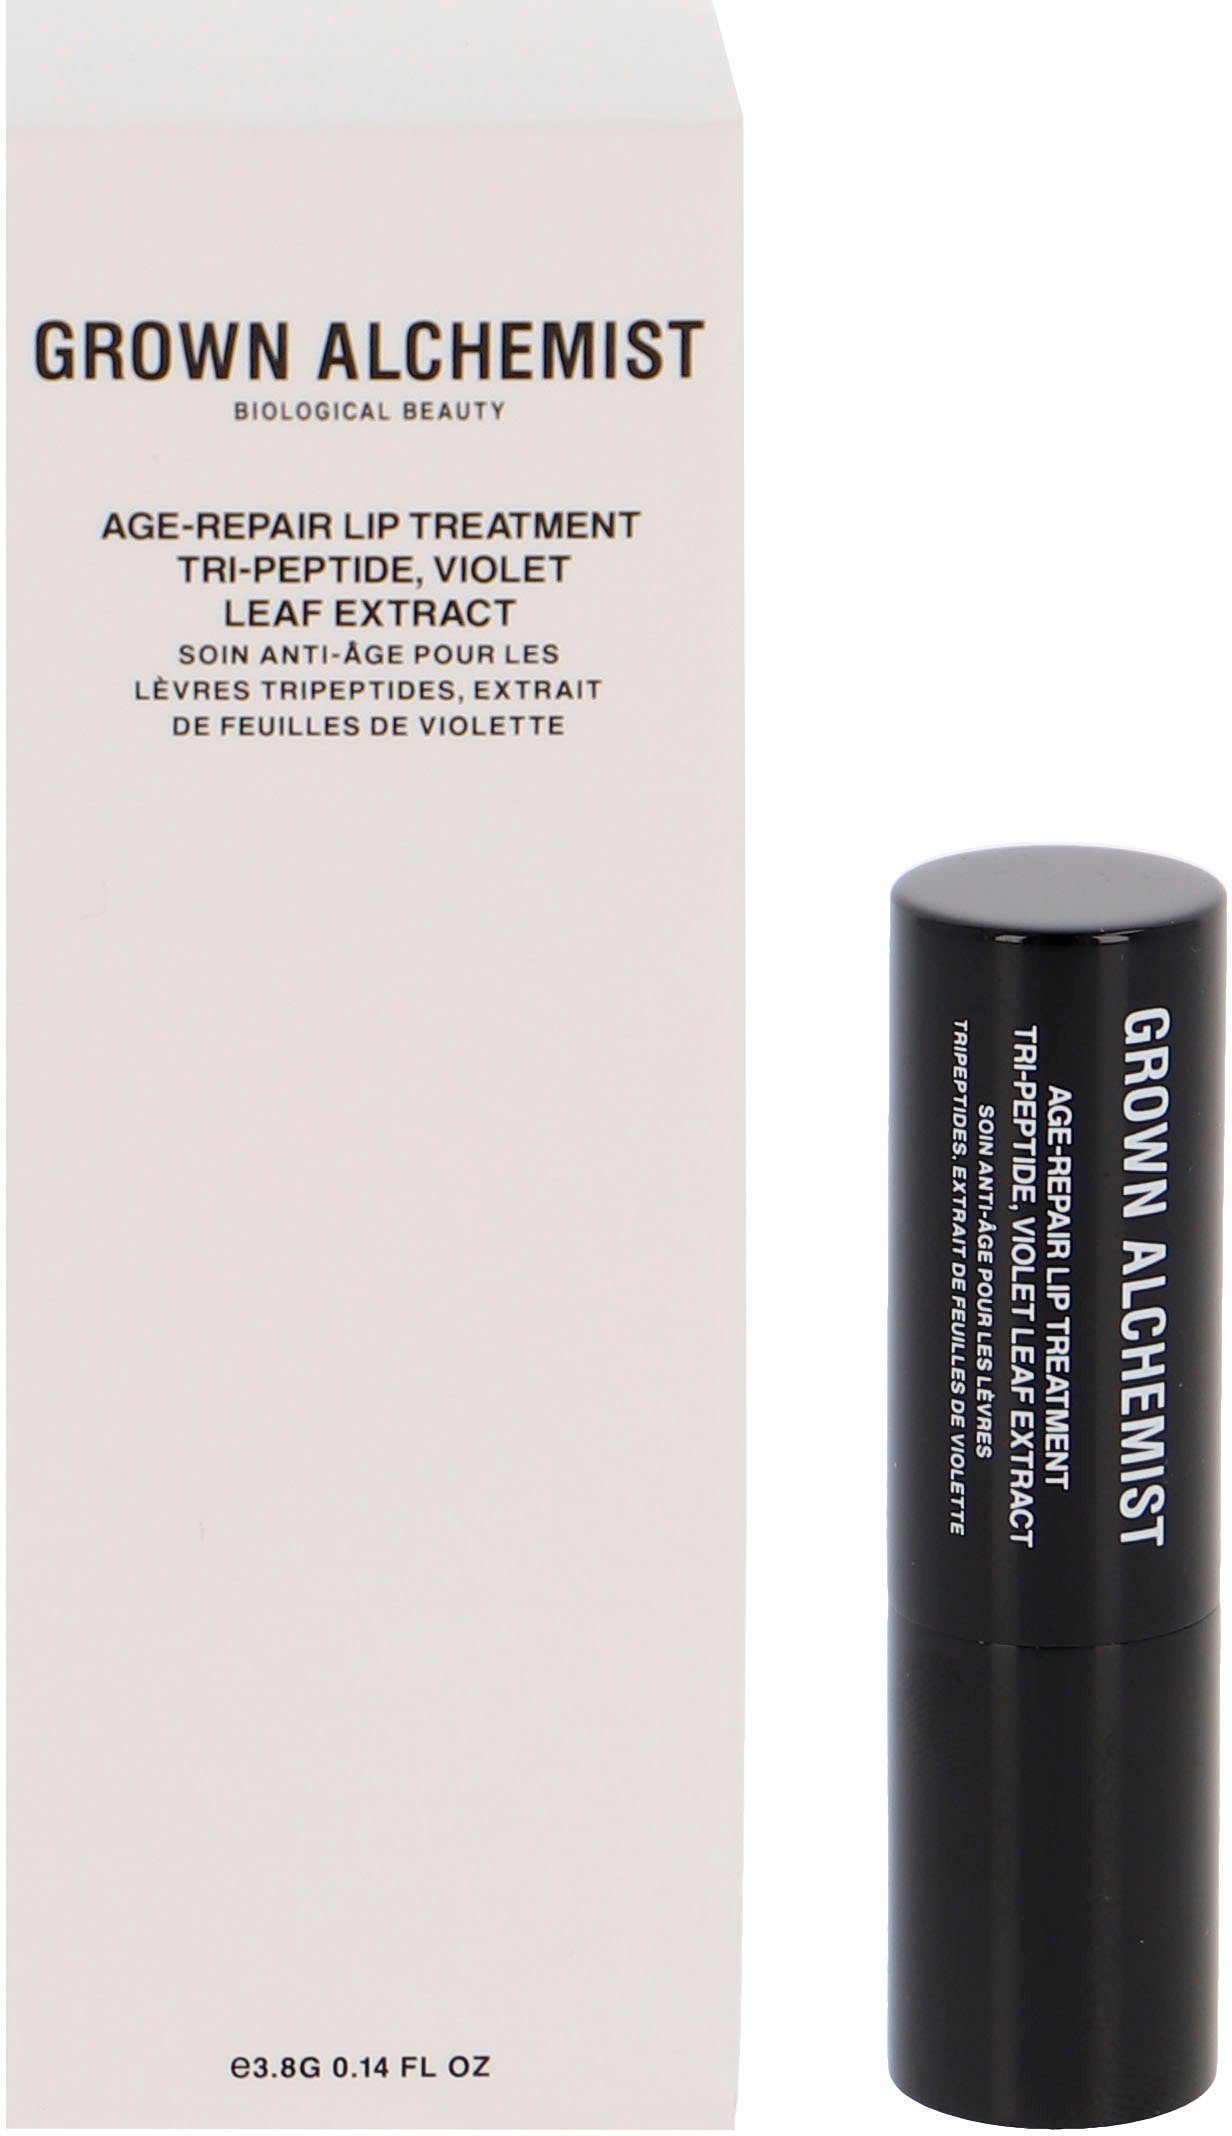 Violet Lip Extract Lippencreme Treatment: Leaf Tri-Peptide, ALCHEMIST GROWN Age-Repair